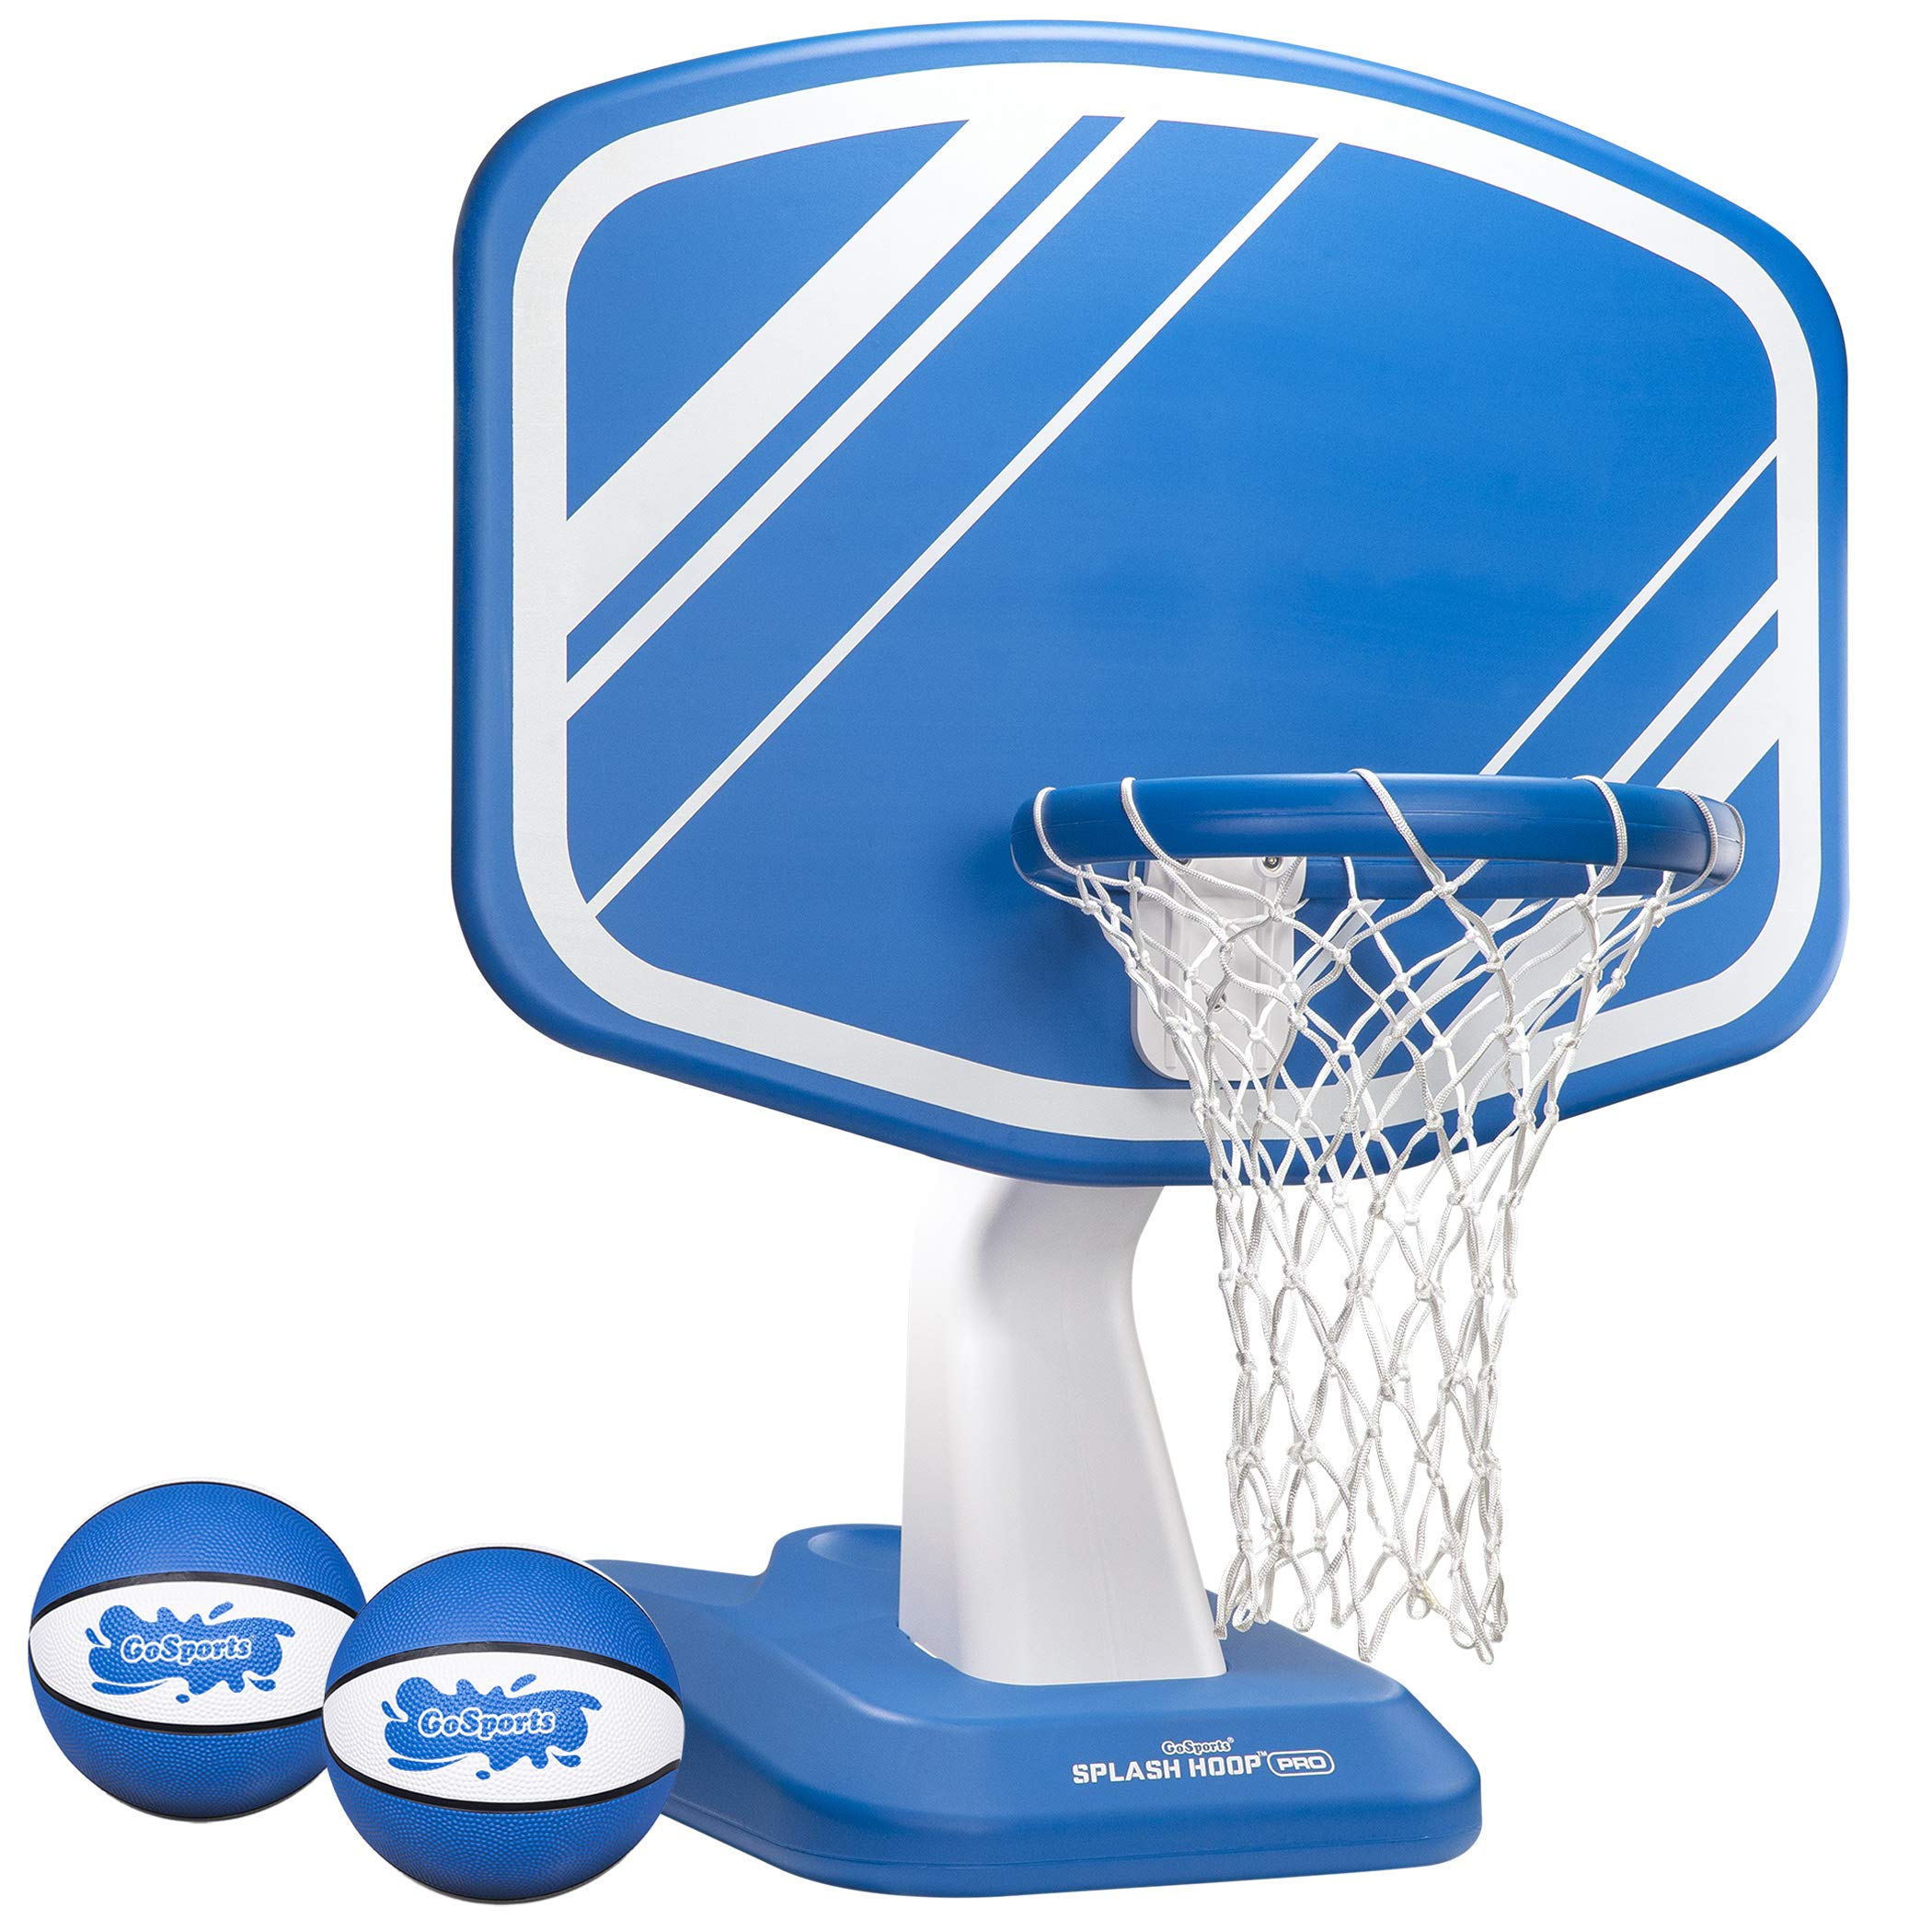 GoSports Splash Hoop 泳池篮球游戏，包括池畔水上篮球框、2 个球和打气筒，选择您的风格